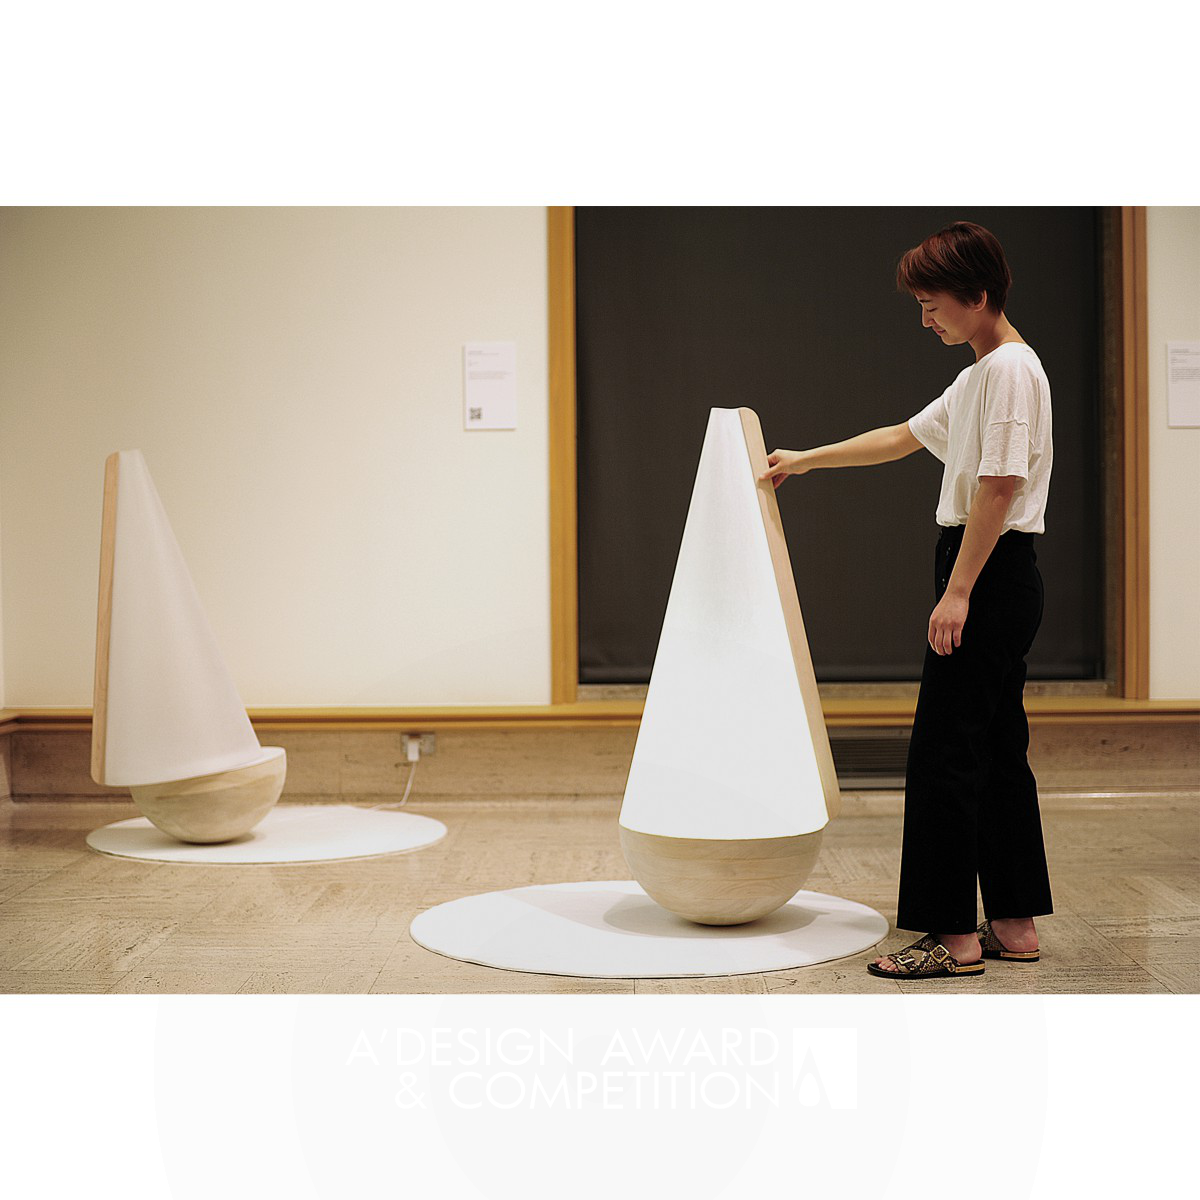 15 degree Interaction Lamp by Chen Yizhou